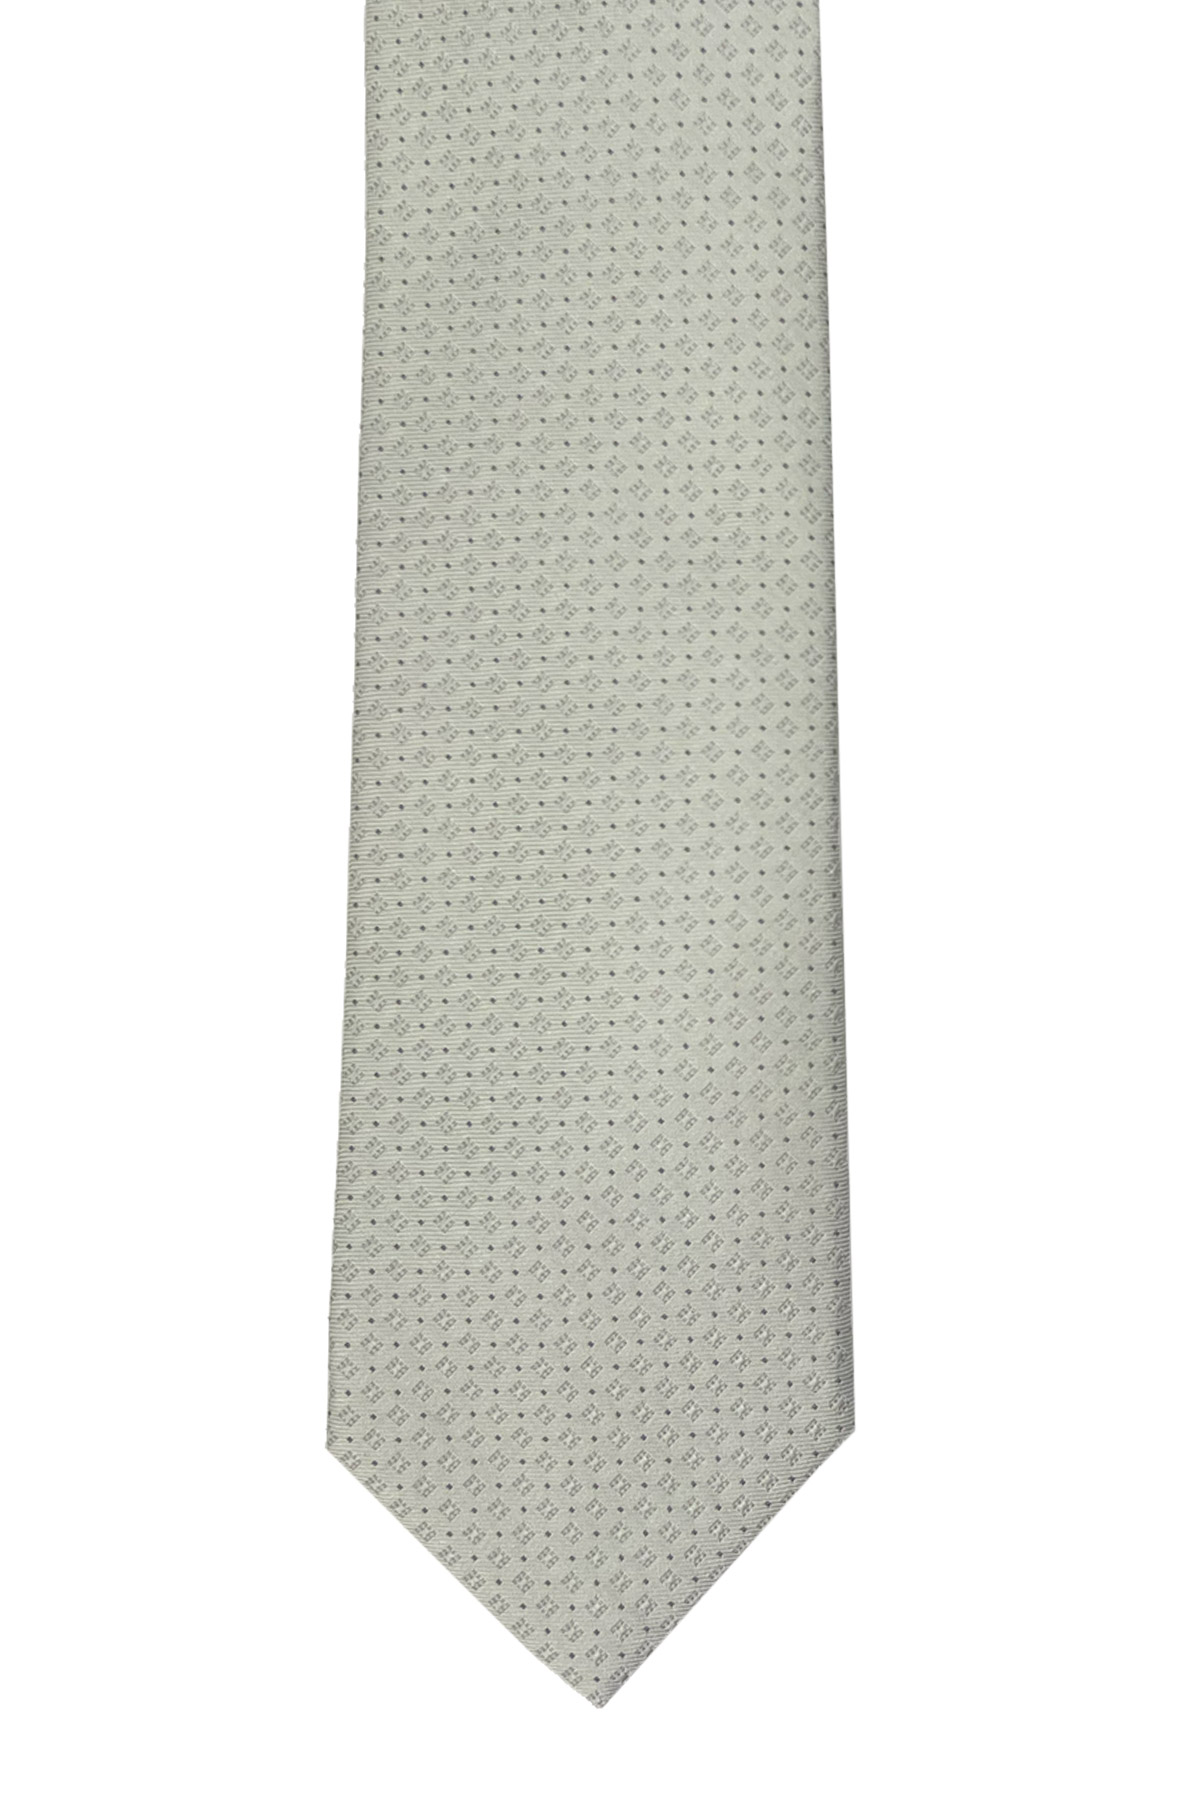 Cravatta uomo grigio chiaro 9cm fantasia quadratini e pois da cerimonia elegante pura seta